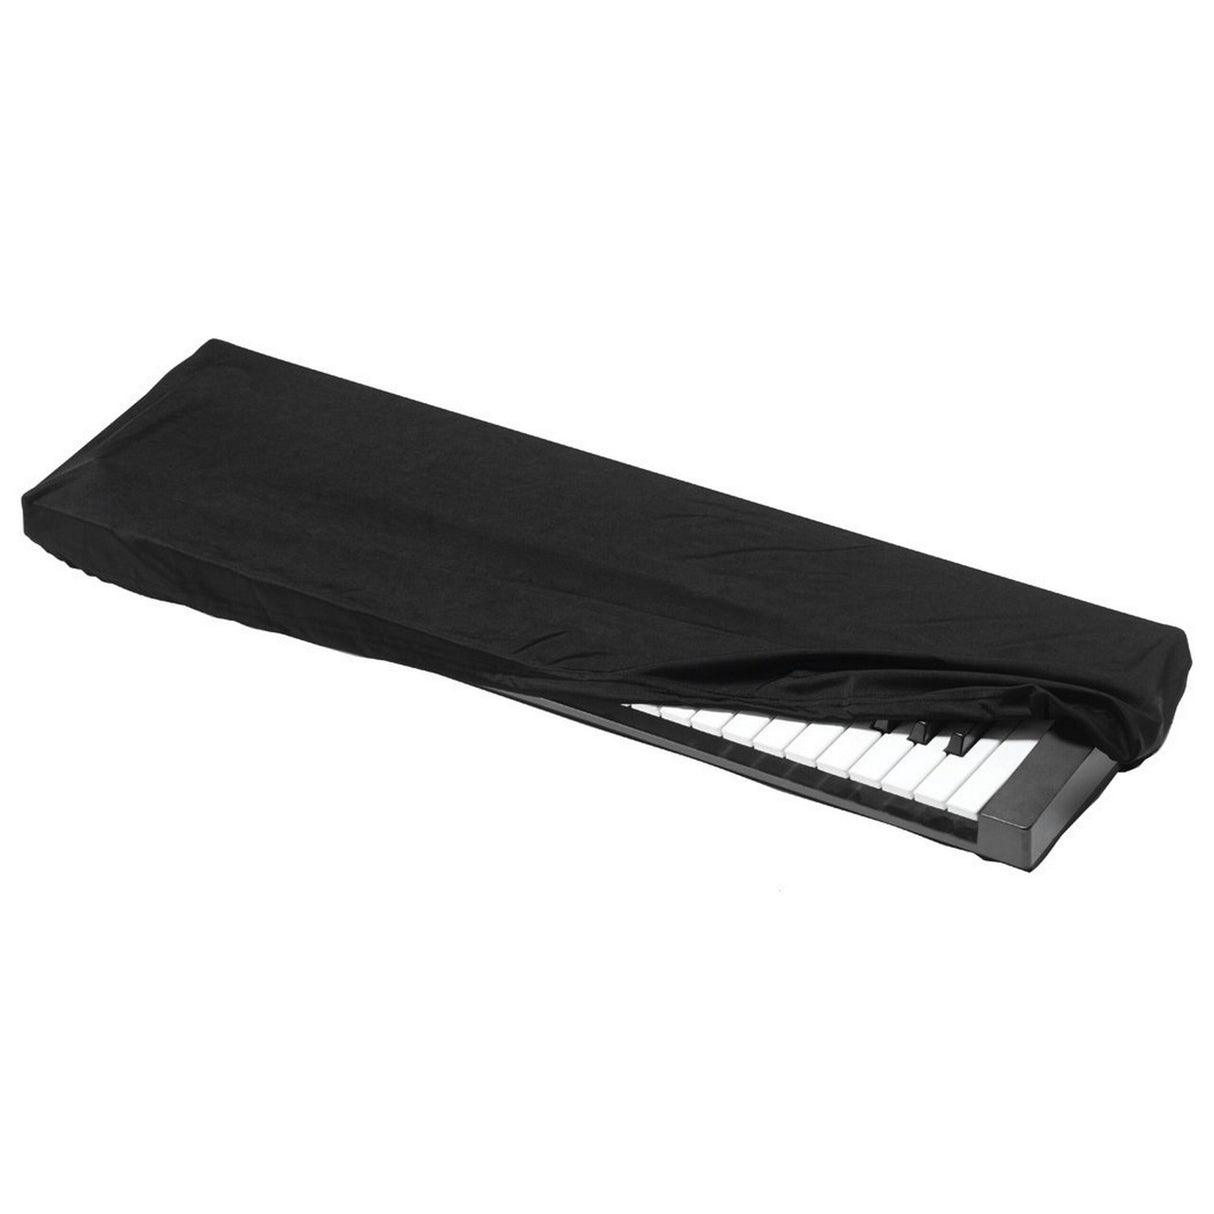 Kaces KKC-MD Stretchy Keyboard Dust Cover - Medium (61-76 key)